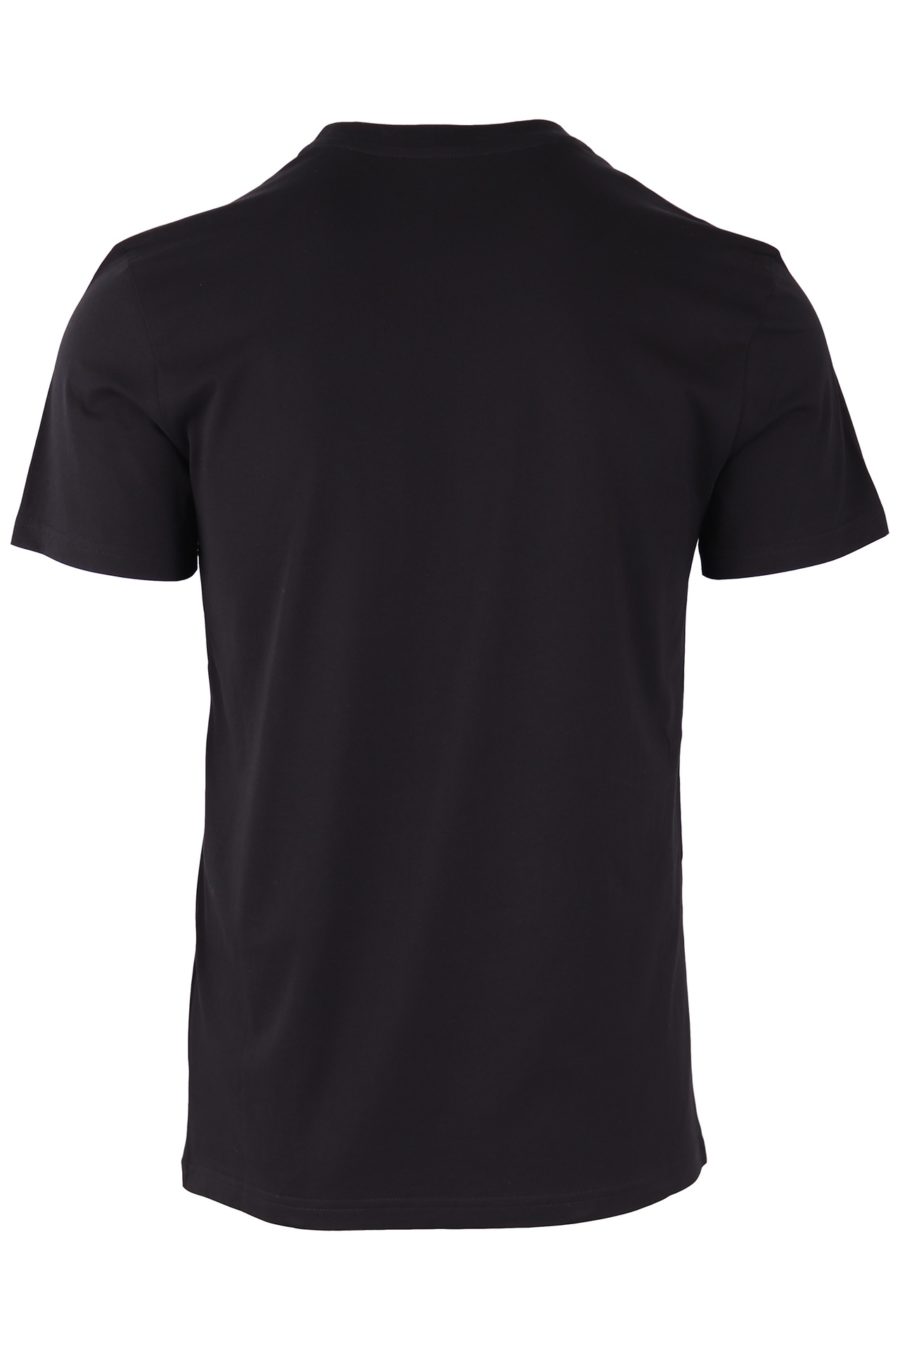 Camiseta Moschino Couture Milano negra con logo blanco - 2f1eed7cf6e2a3e9b5314da67760c824c9ed5c5f